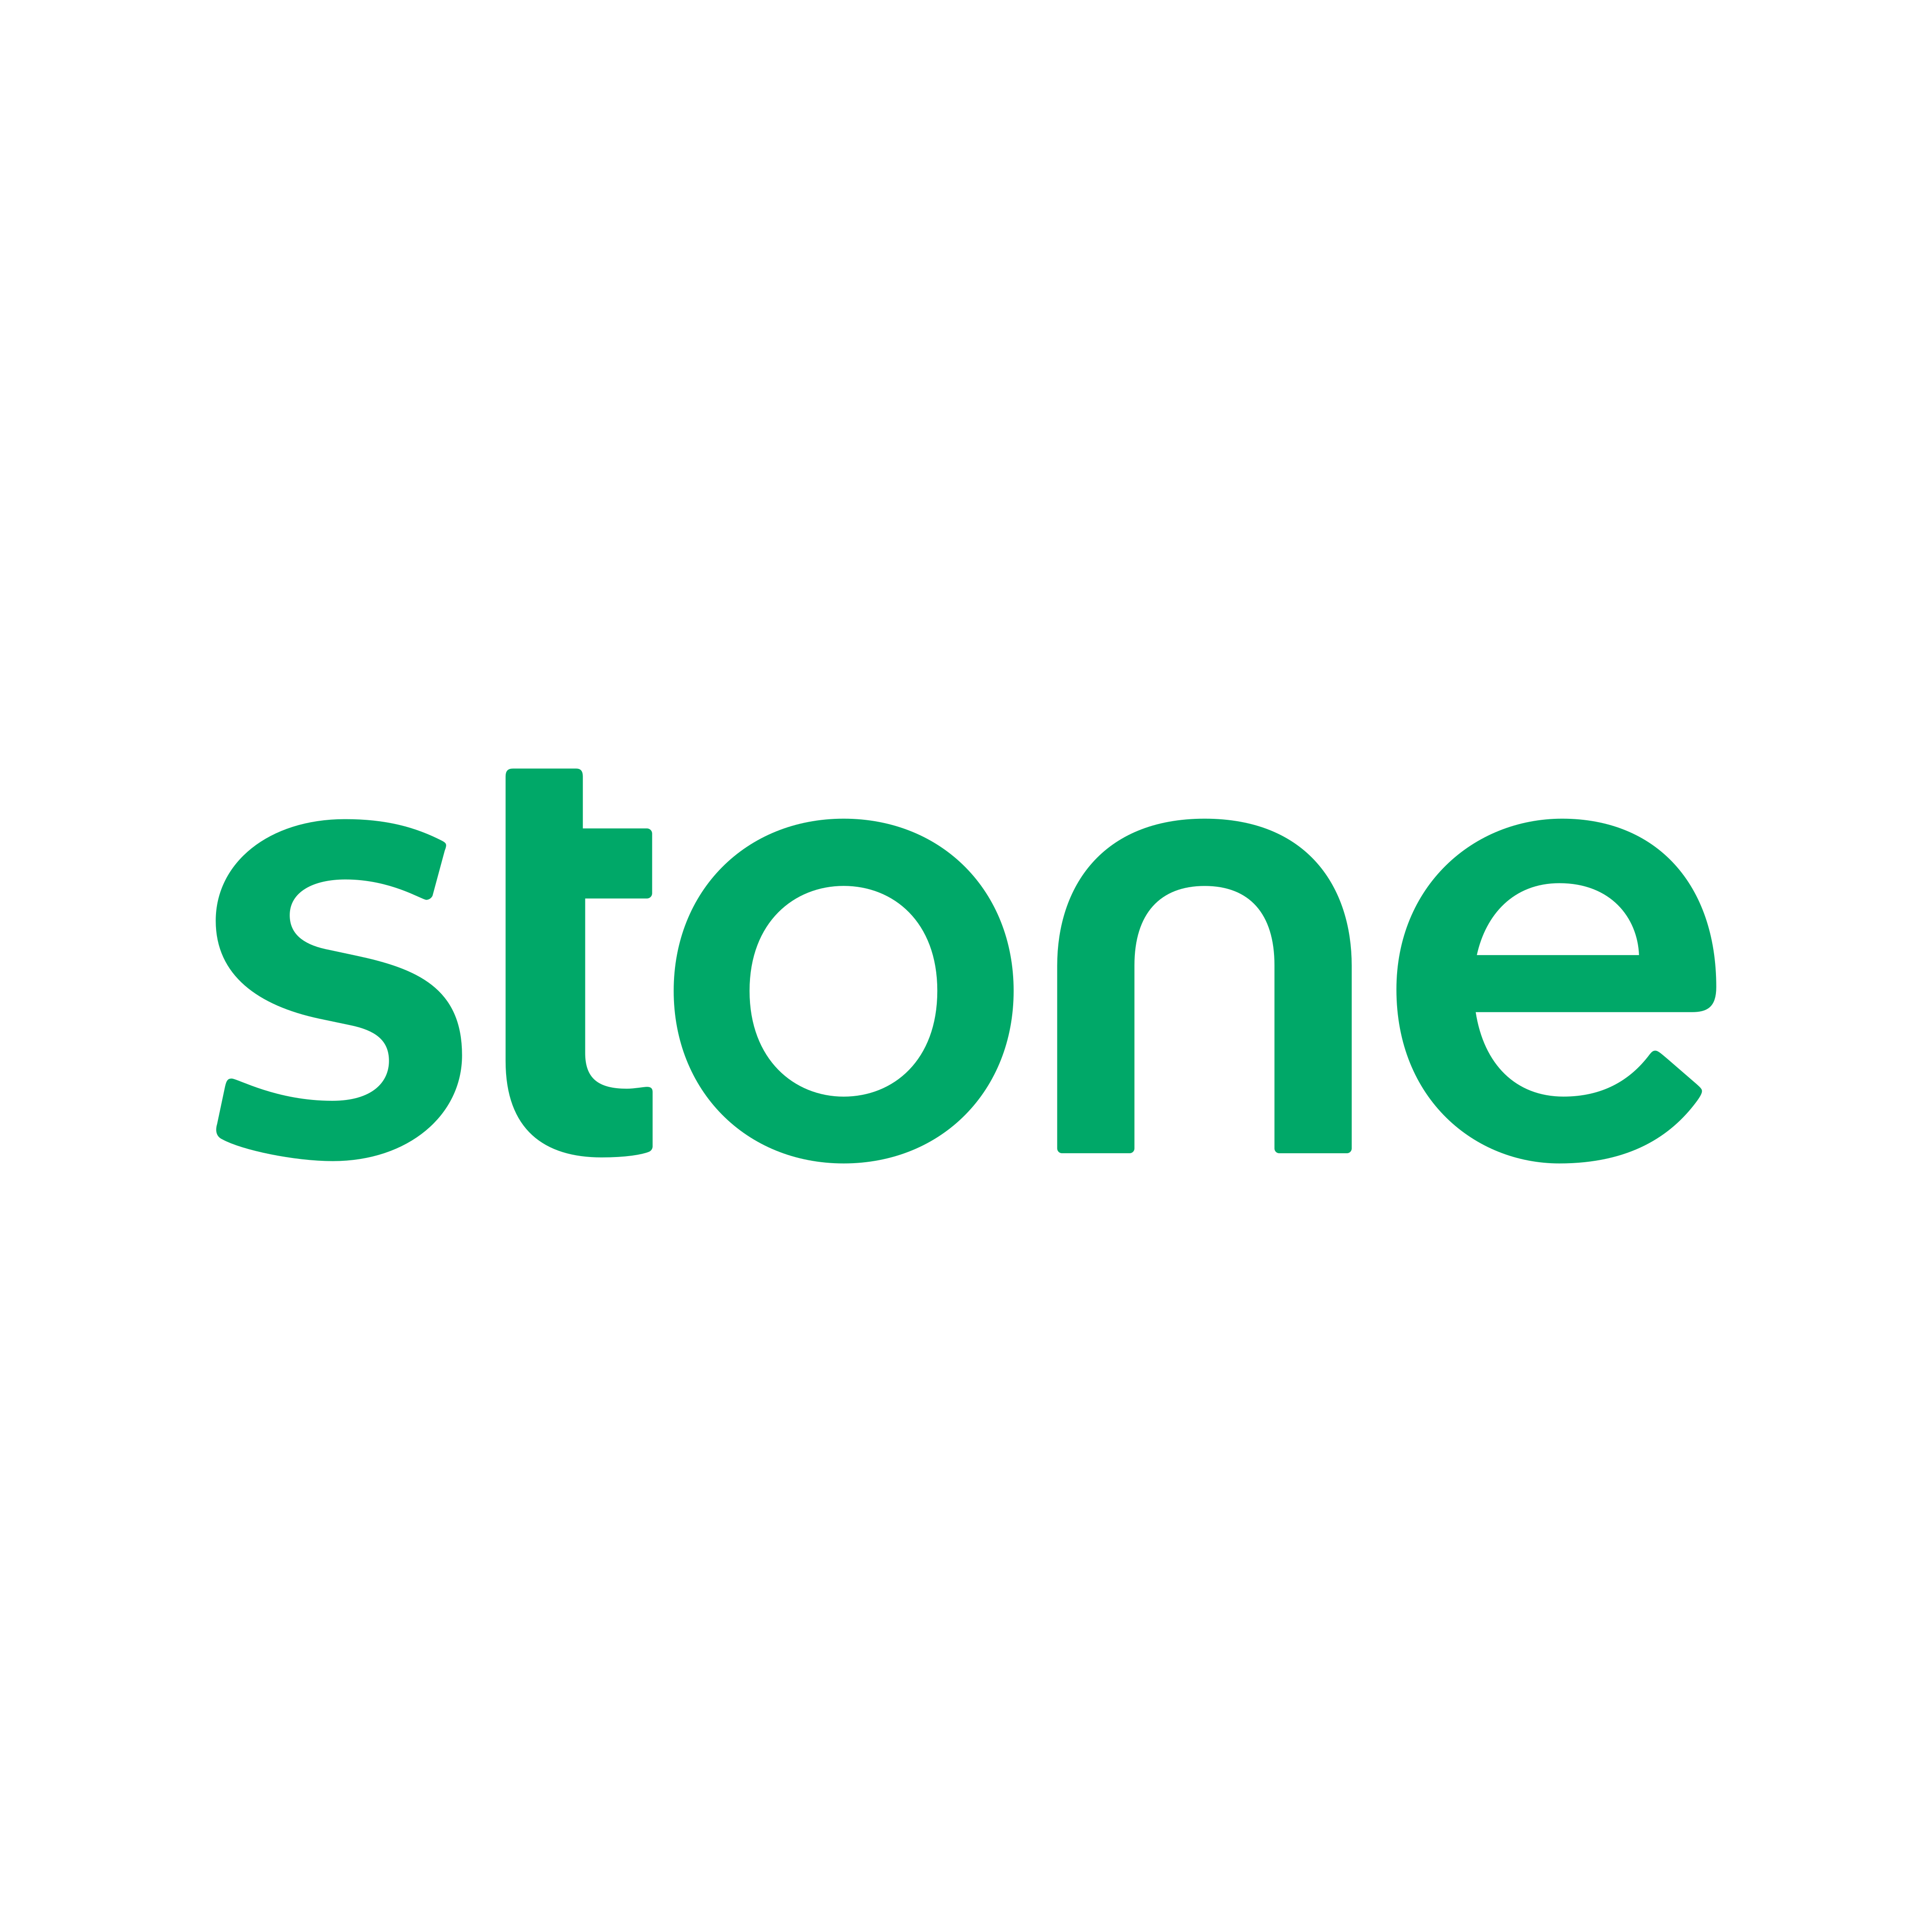 Stone Logo PNG.